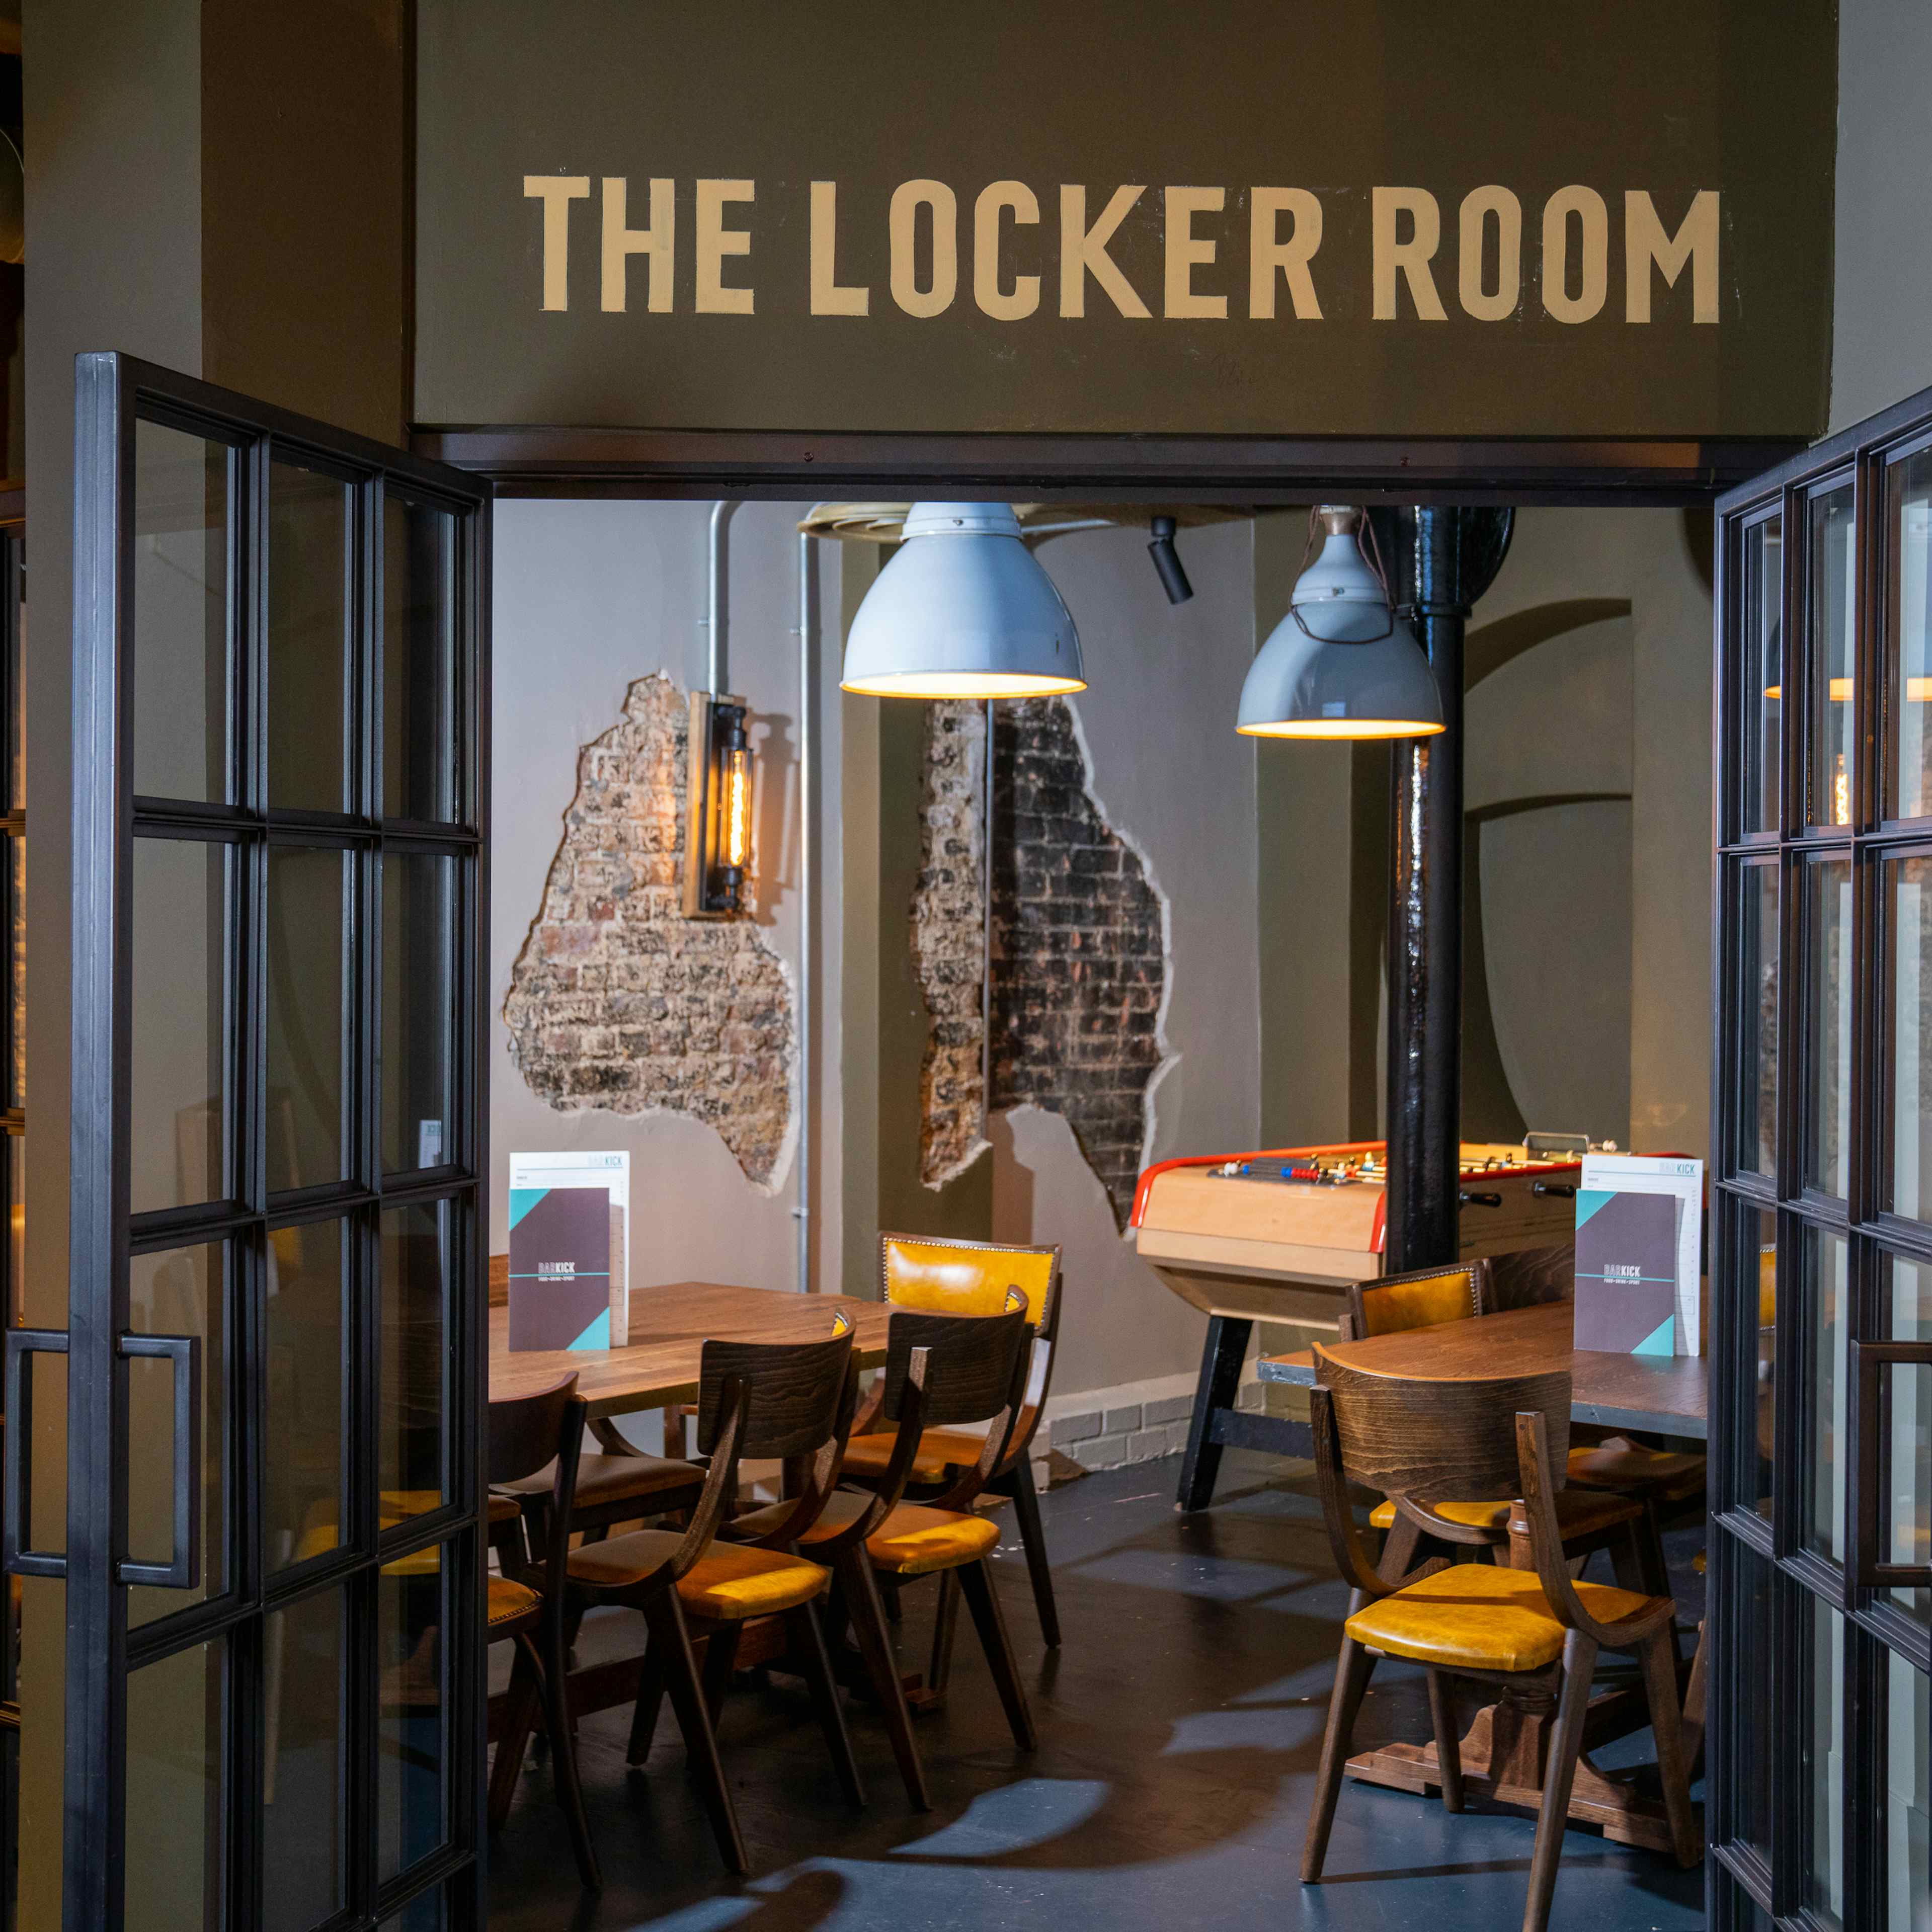 Bar Kick - The Locker Room image 1